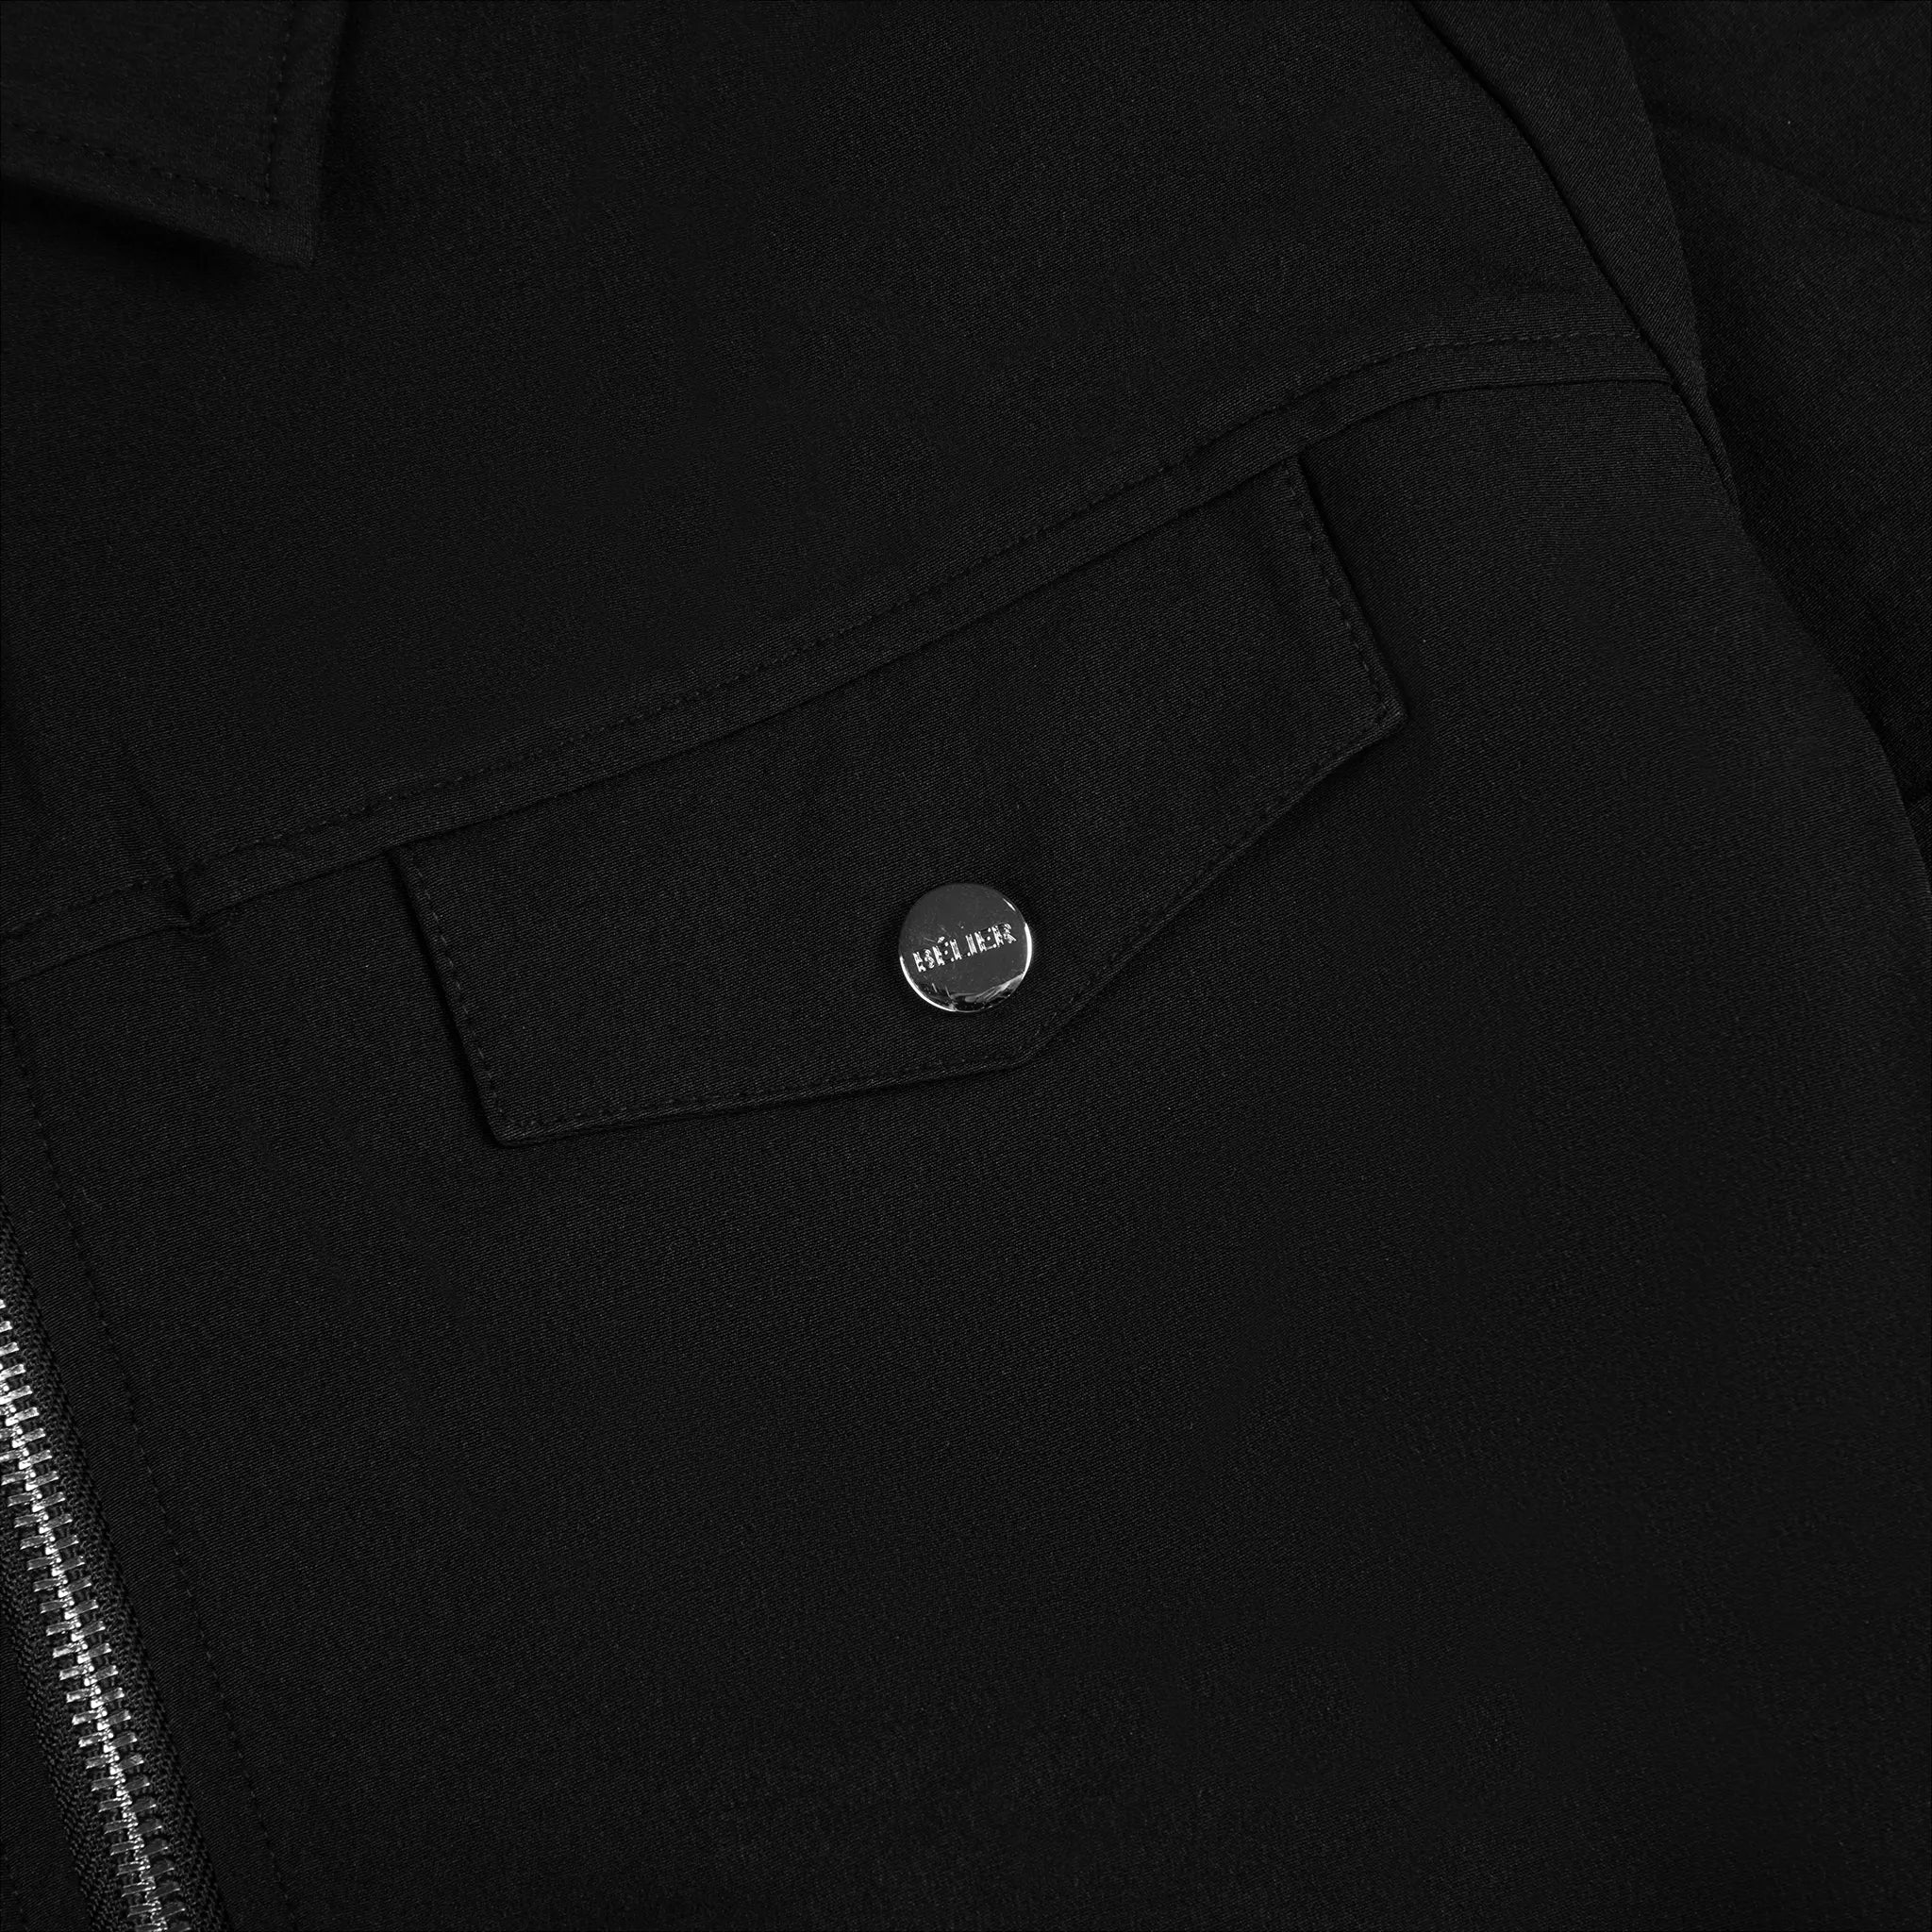 Detail view of Belier Traveller 2.0 Black Overshirt Jacket BM-116